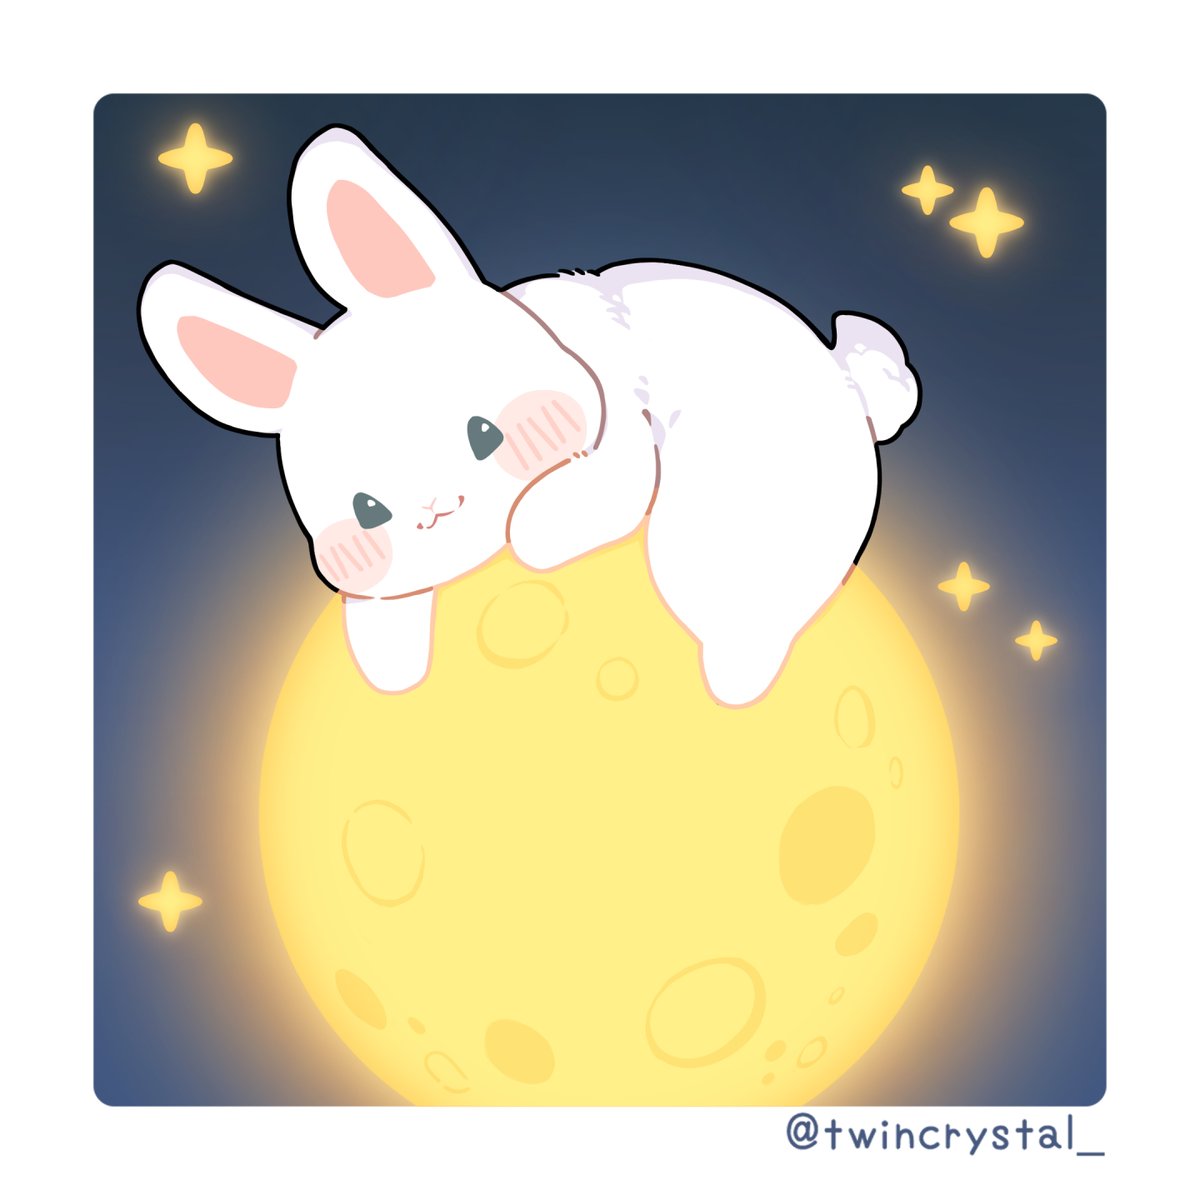 Admire the full moon🌕🐇

#illustration #bunny #bunnyart #イラスト #うさぎ #兎 #moonfestival #十五夜 #中秋の名月